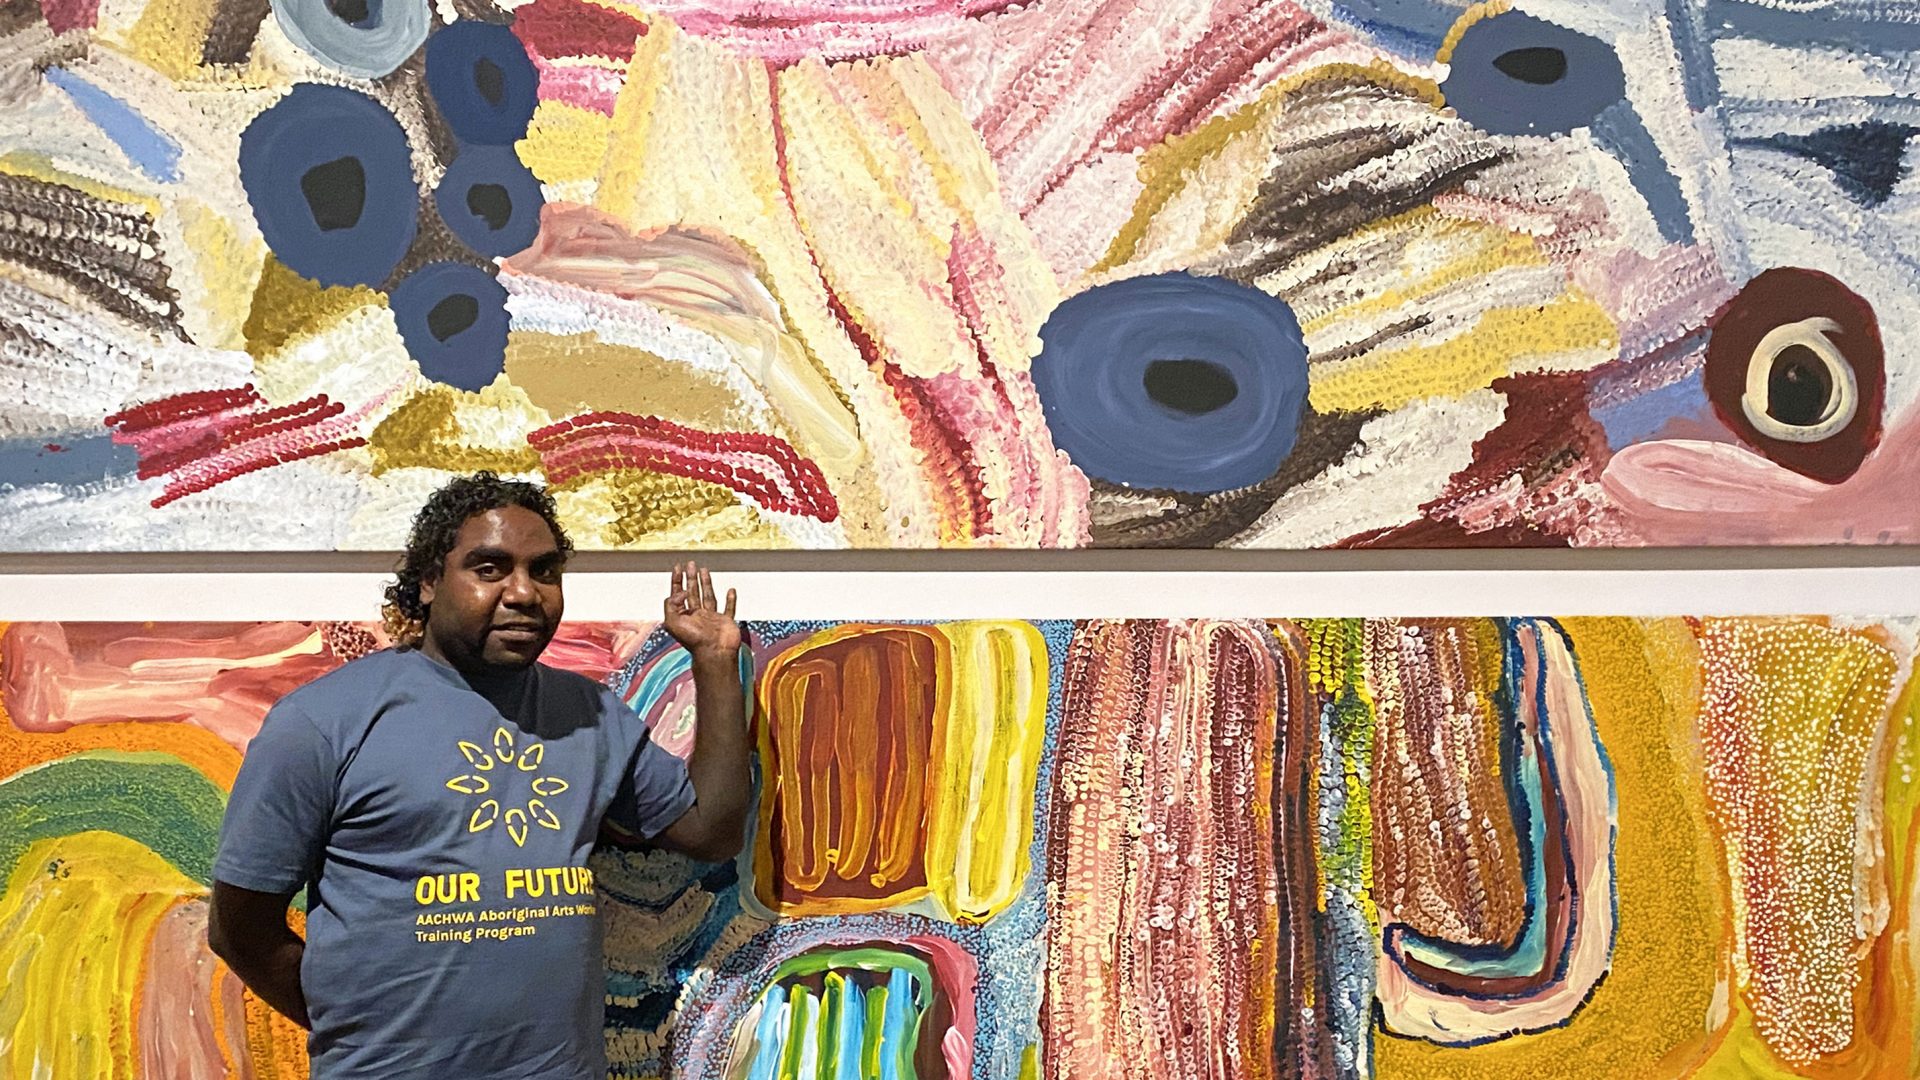 OUR FUTURE 2021 Aboriginal Arts Worker Trainee Corban Williams with Martumili painting at the Western Australian Museum. Photo: Glenda Dixon.